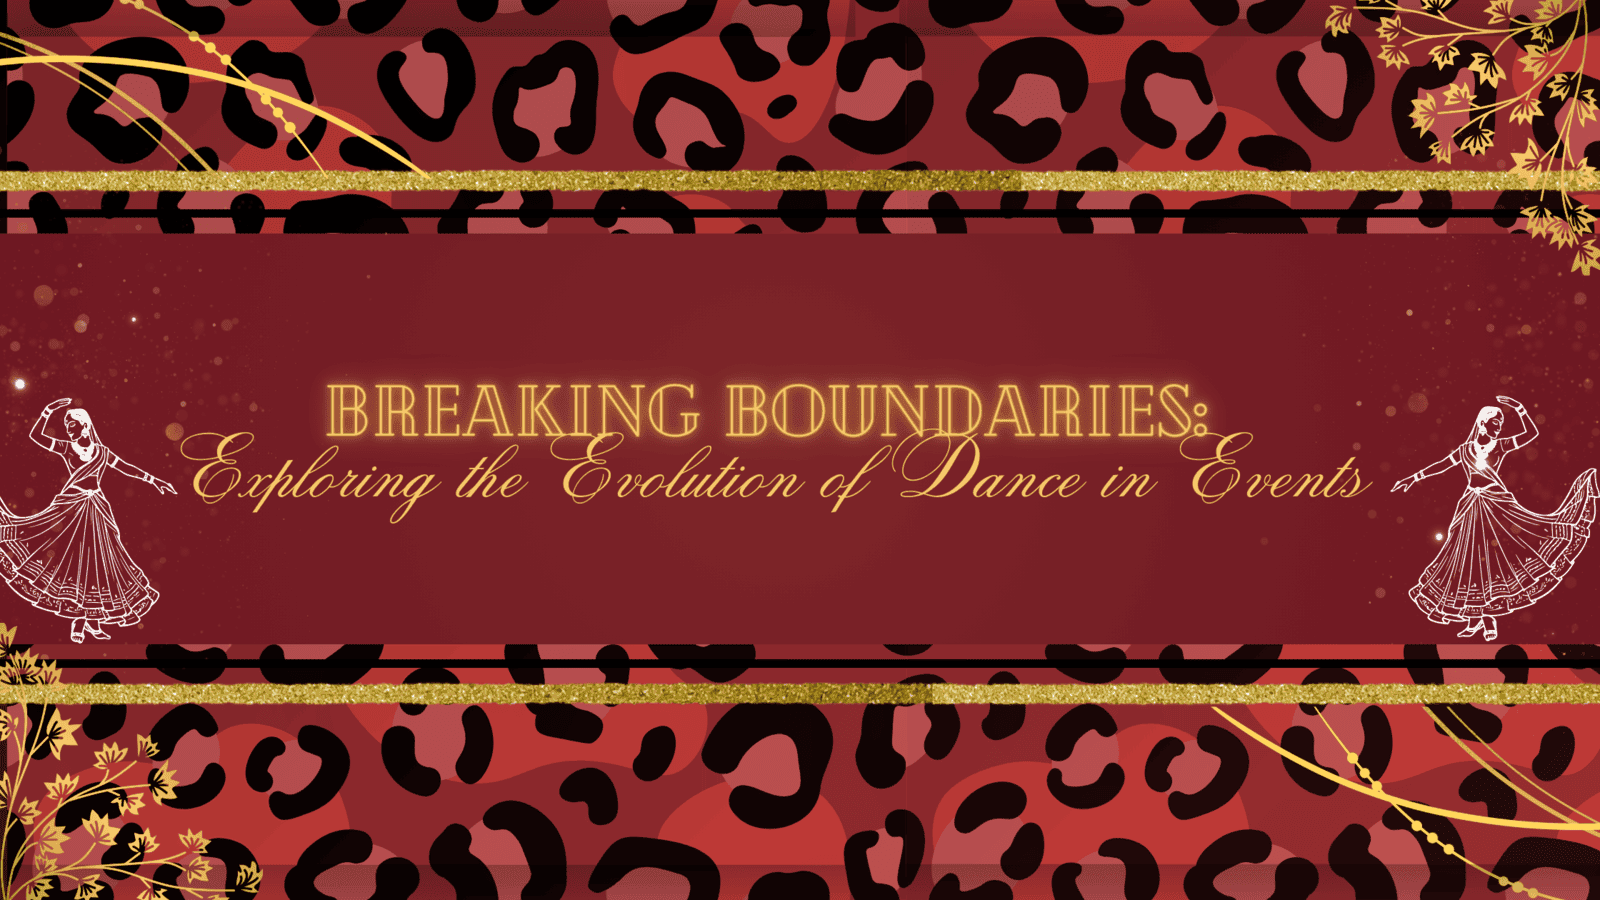 Breaking Boundaries: Exploring the Evolution of Dance in Events